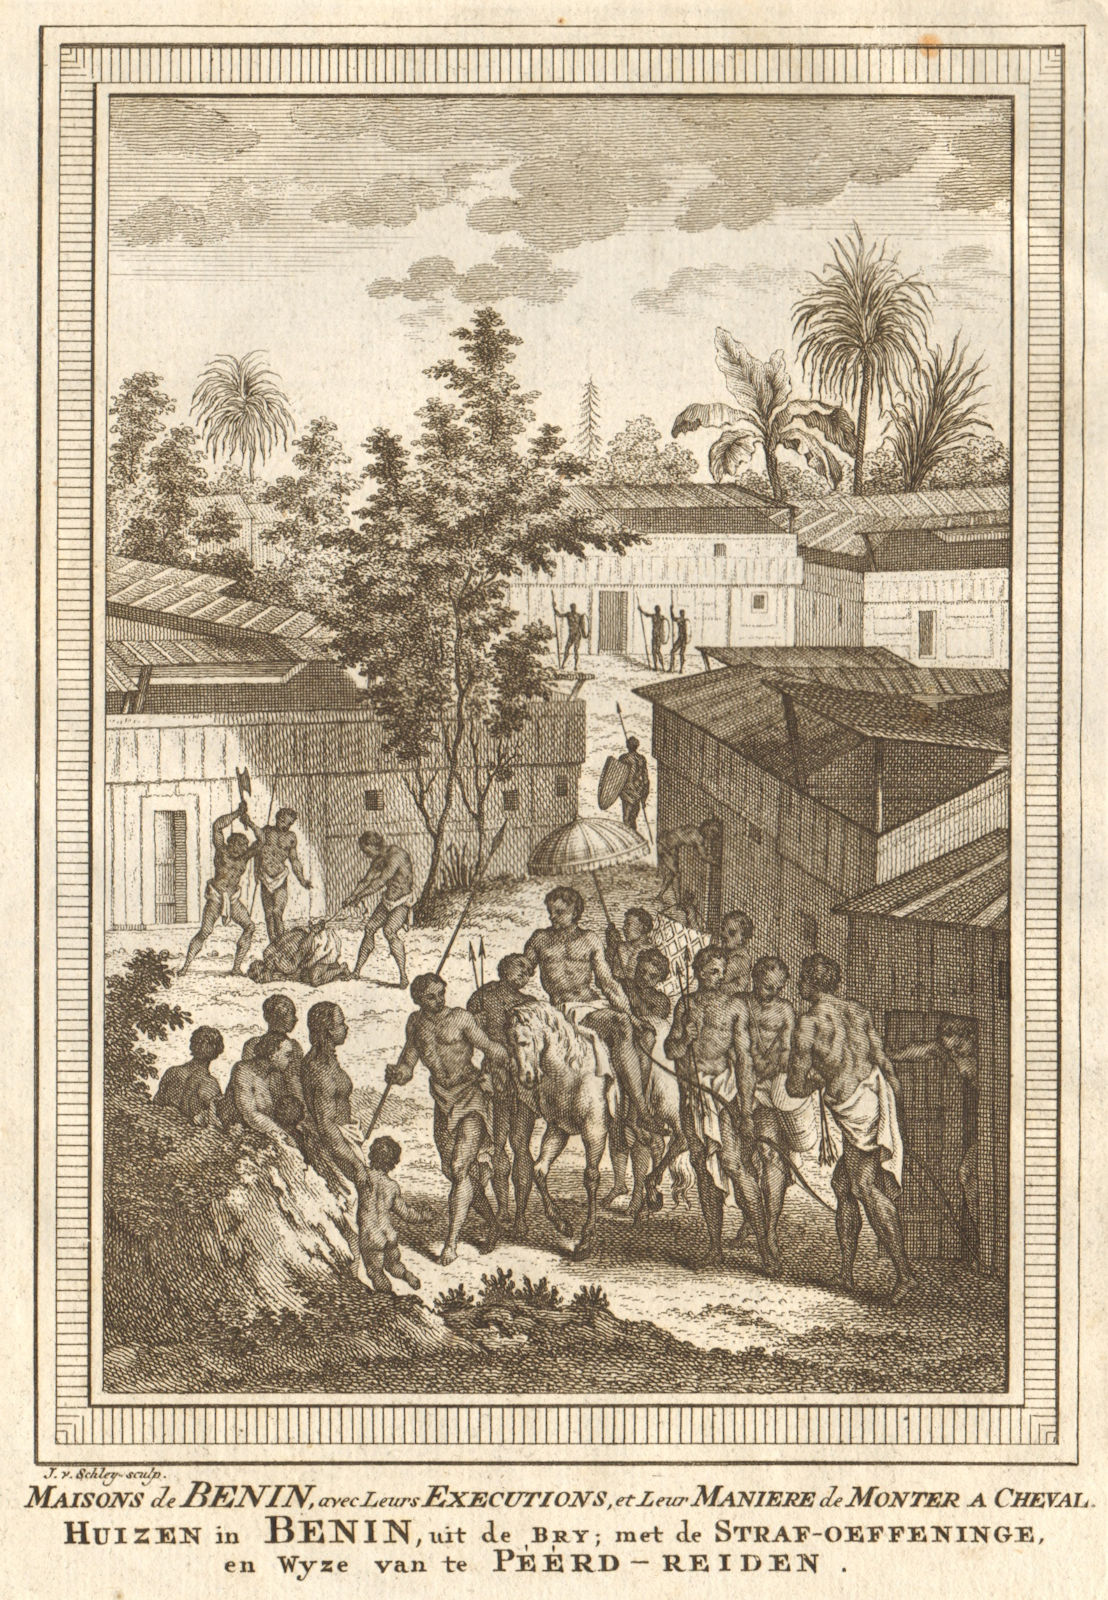 Associate Product Houses of Benin, executions & sidesaddle method of horseback riding. SCHLEY 1748